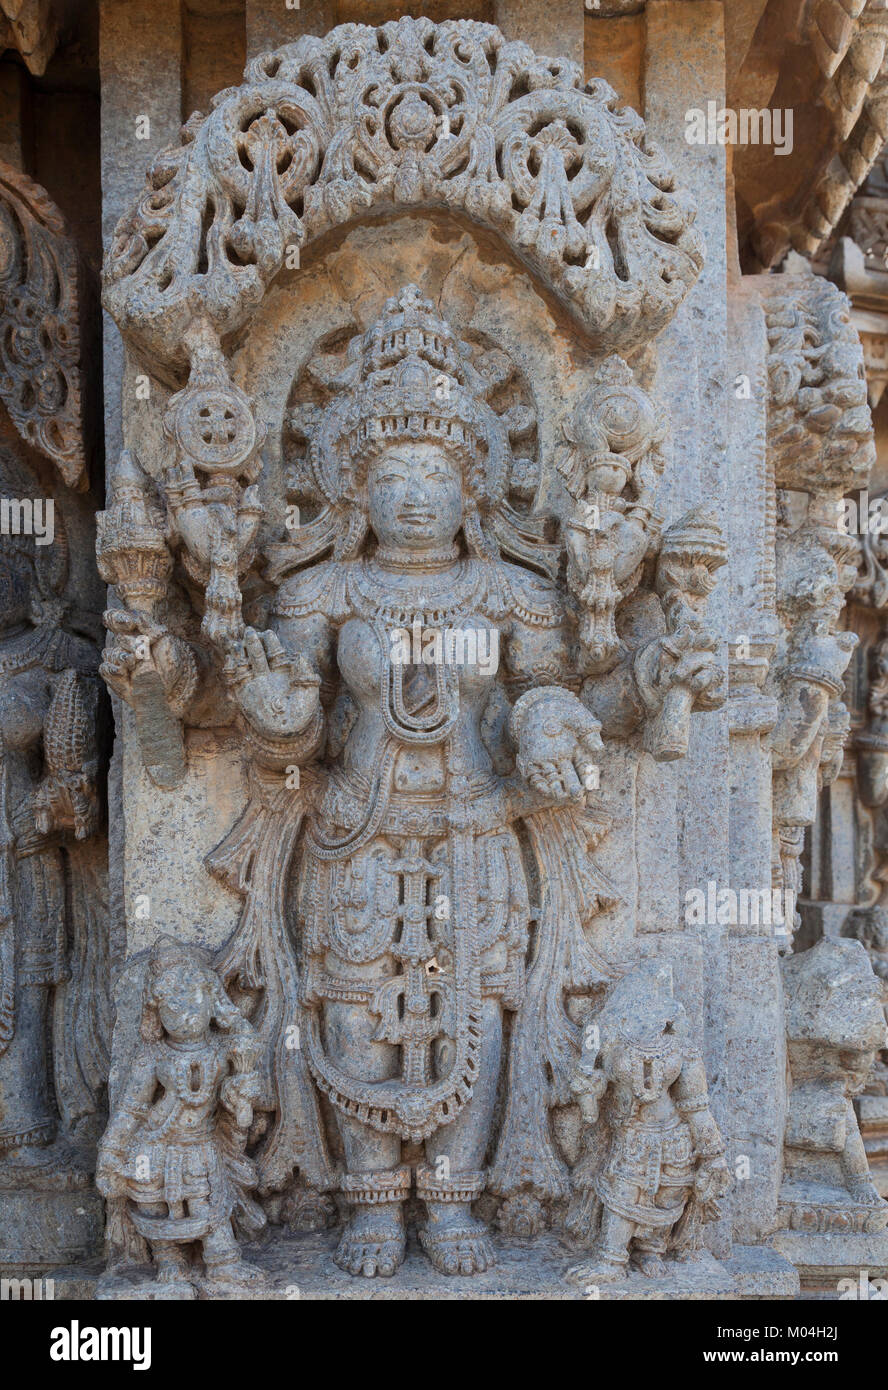 India, Karnataka, Somanathapura, Chennakesava Temple Stock Photo